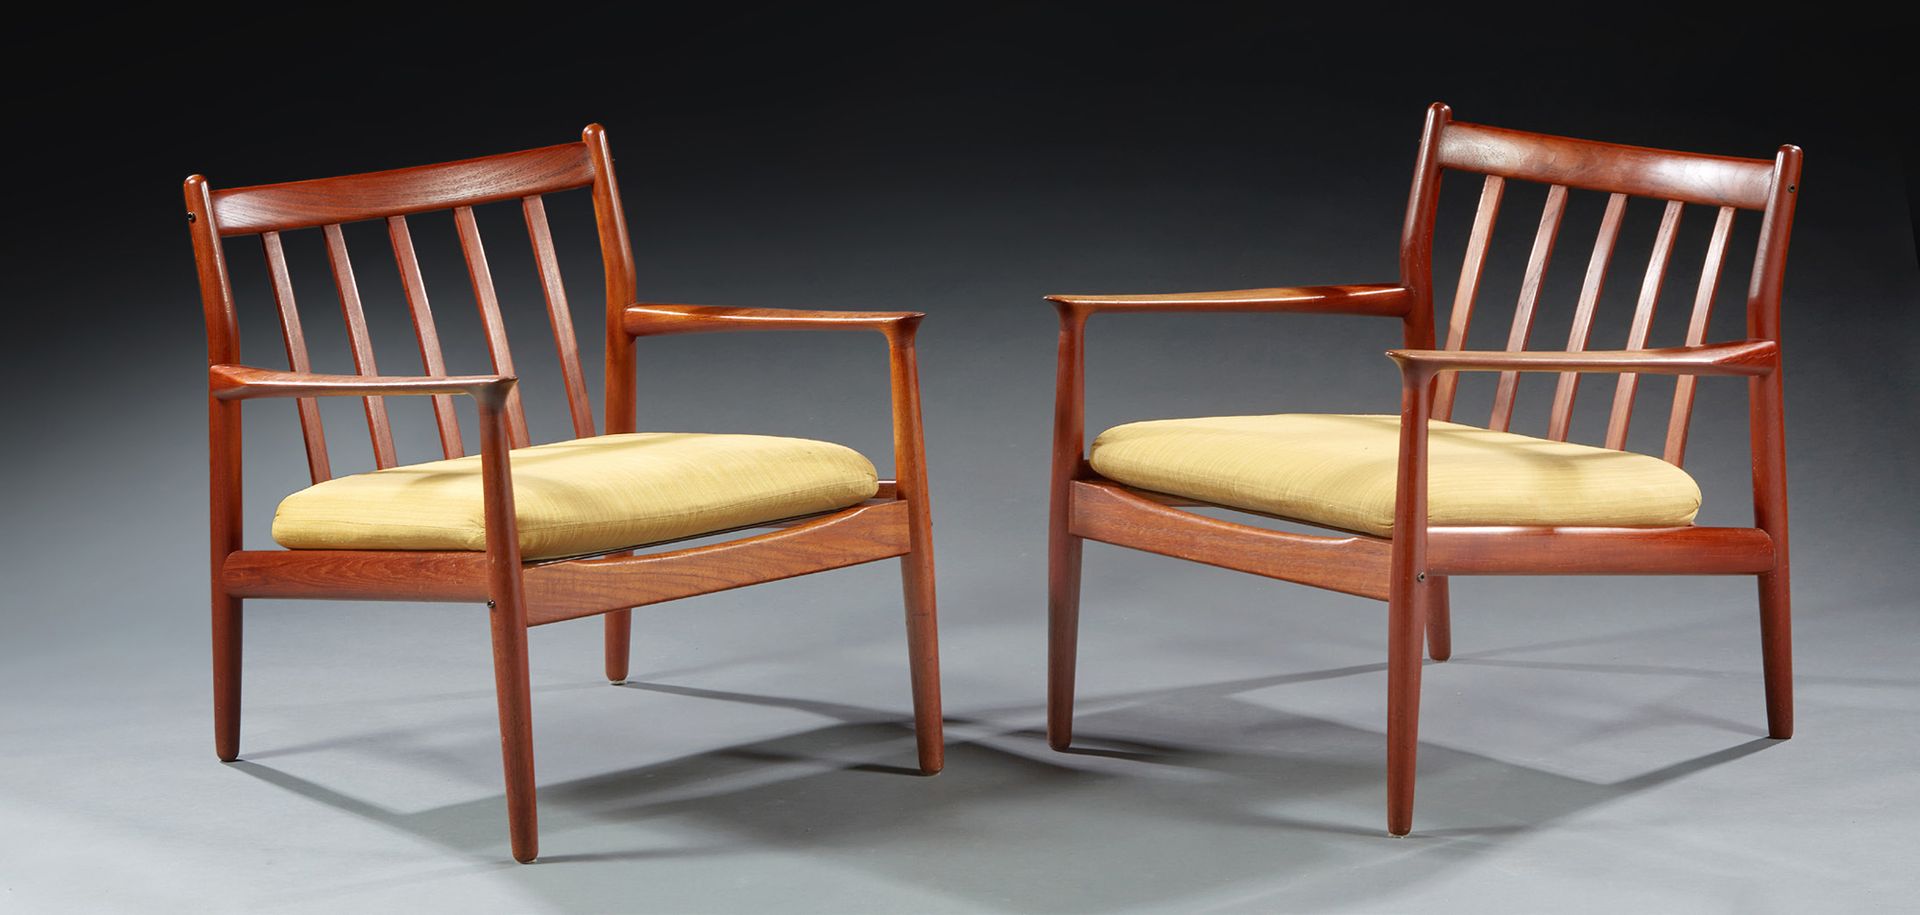 ARNE VODDER (1926-2009) 一对扶手椅，芥末色织物装饰。
尺寸：71 x 72.5 x 63 cm